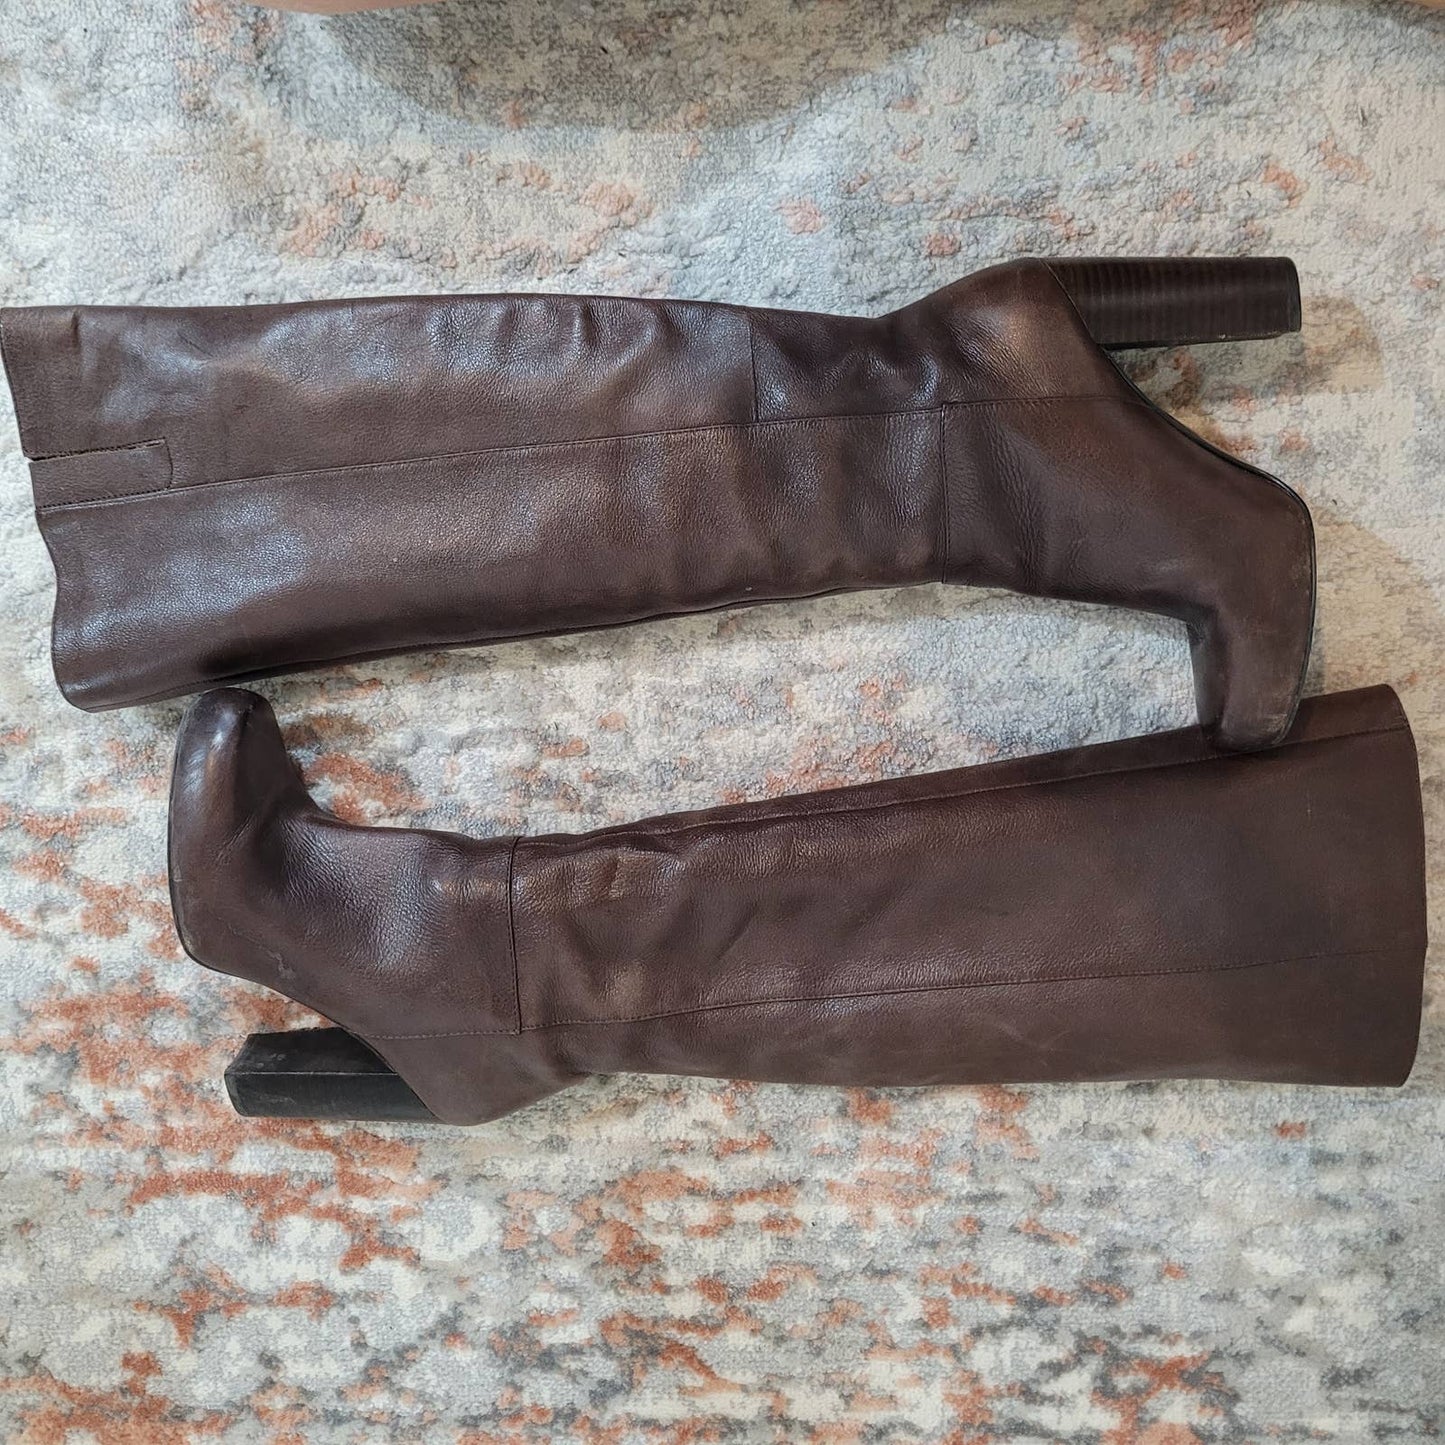 Nine West Crop Shop Brown High Heel Boots - Size 7